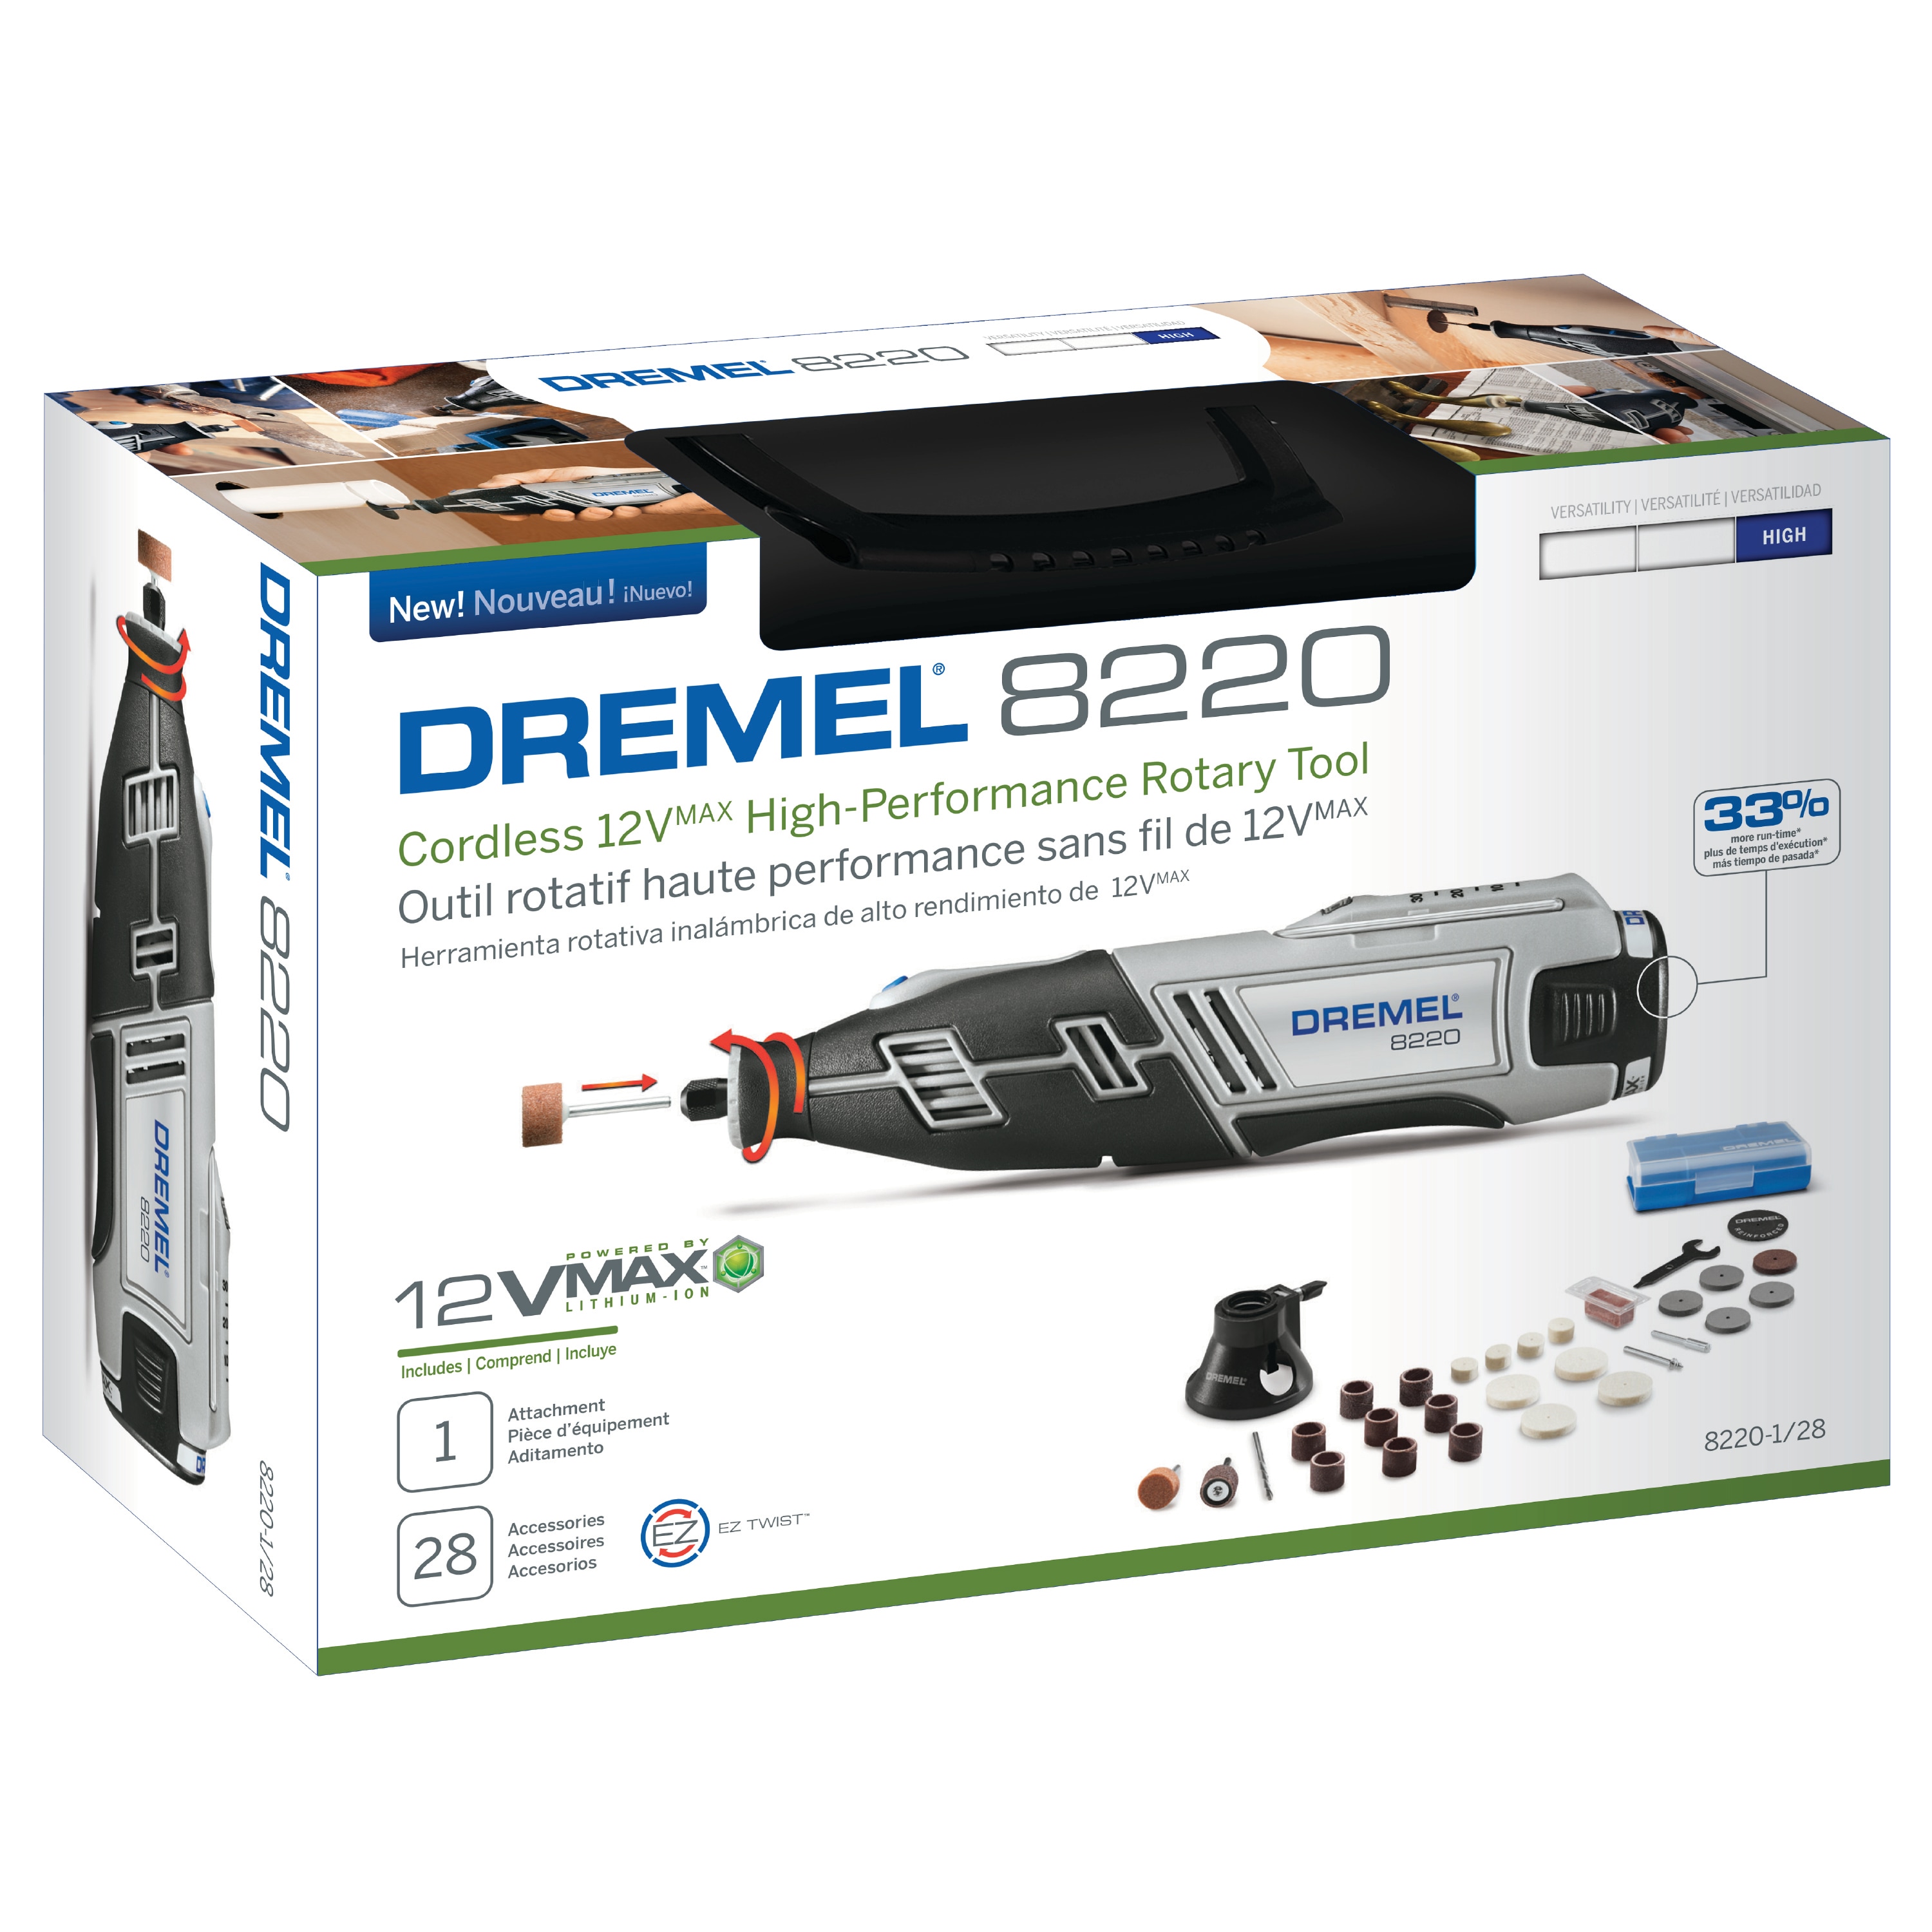 Dremel 8220 cordless - tools - by owner - sale - craigslist